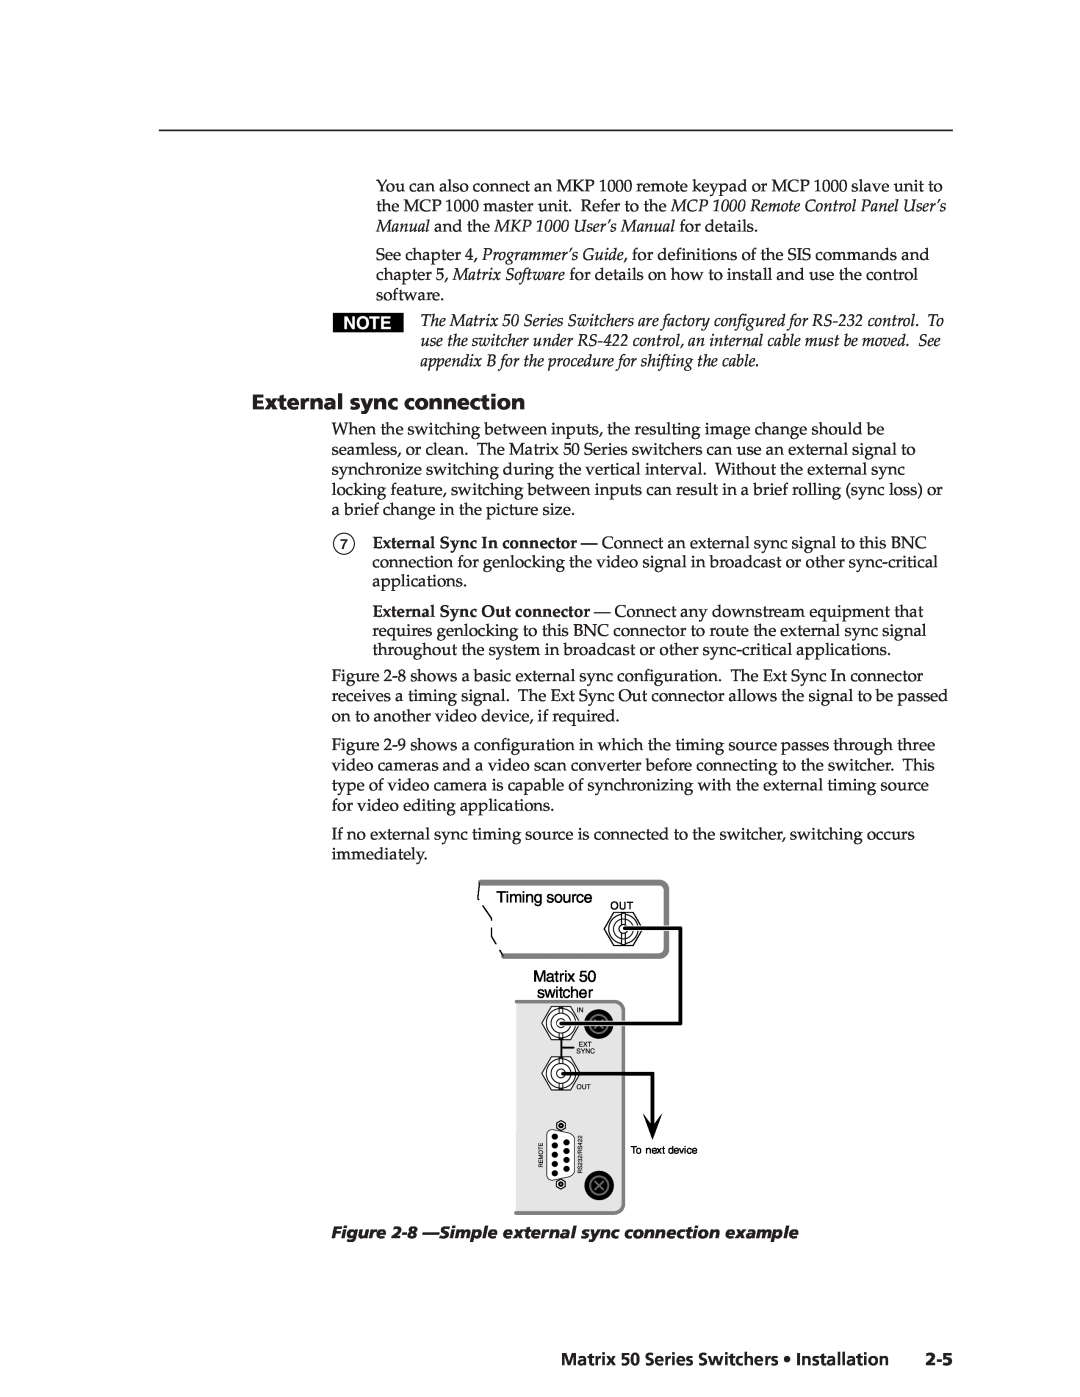 Extron electronic 50 manual External sync connection, 8 -Simple external sync connection example 